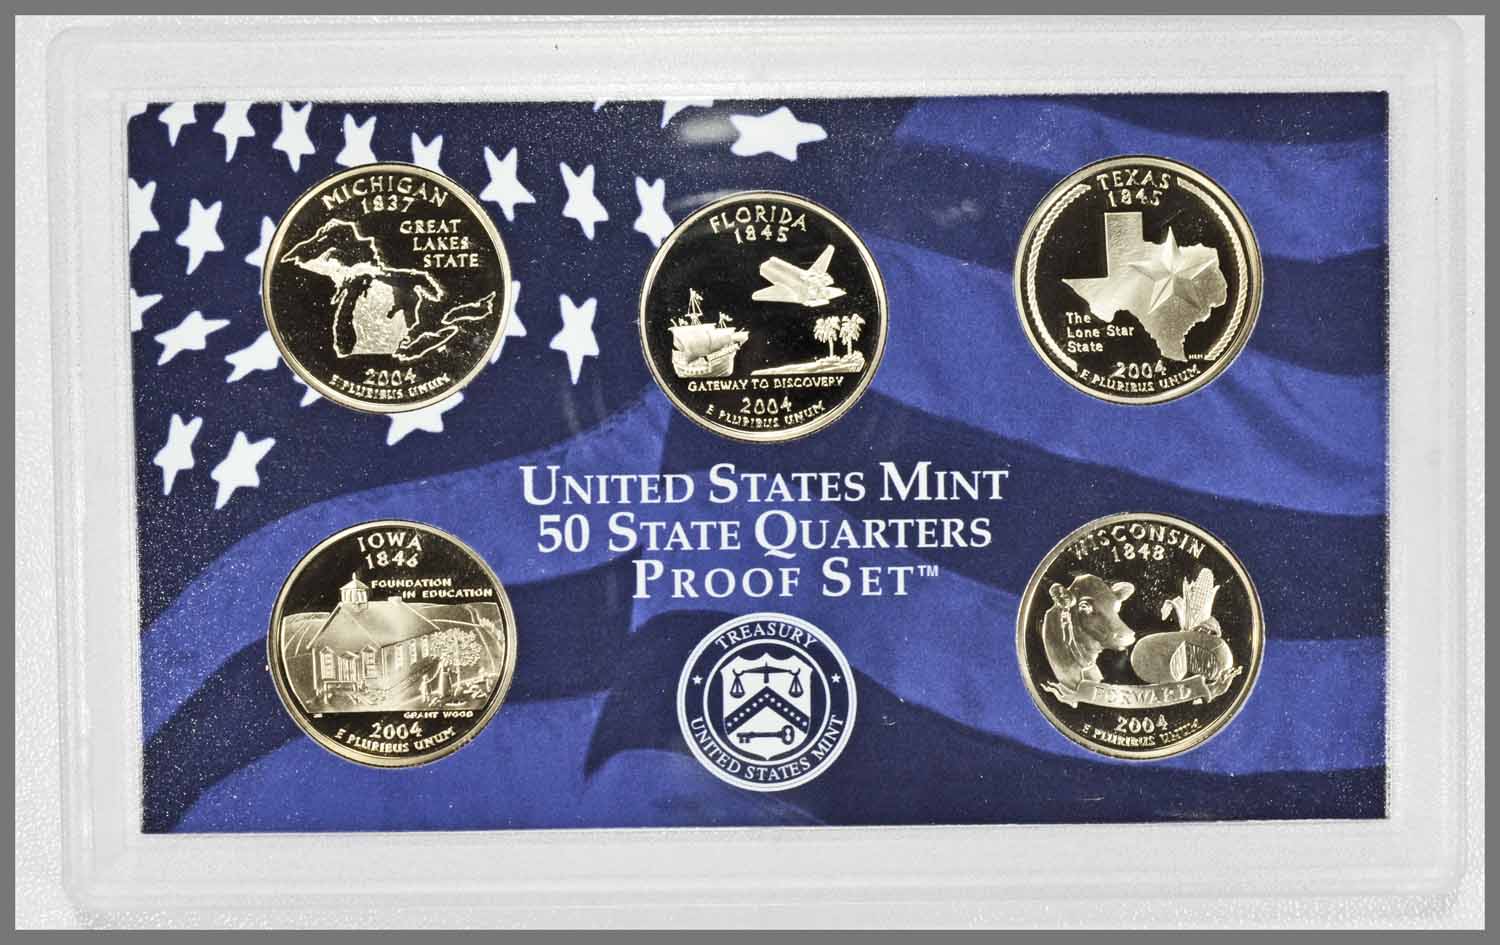 2004 State Quarter Proof Set